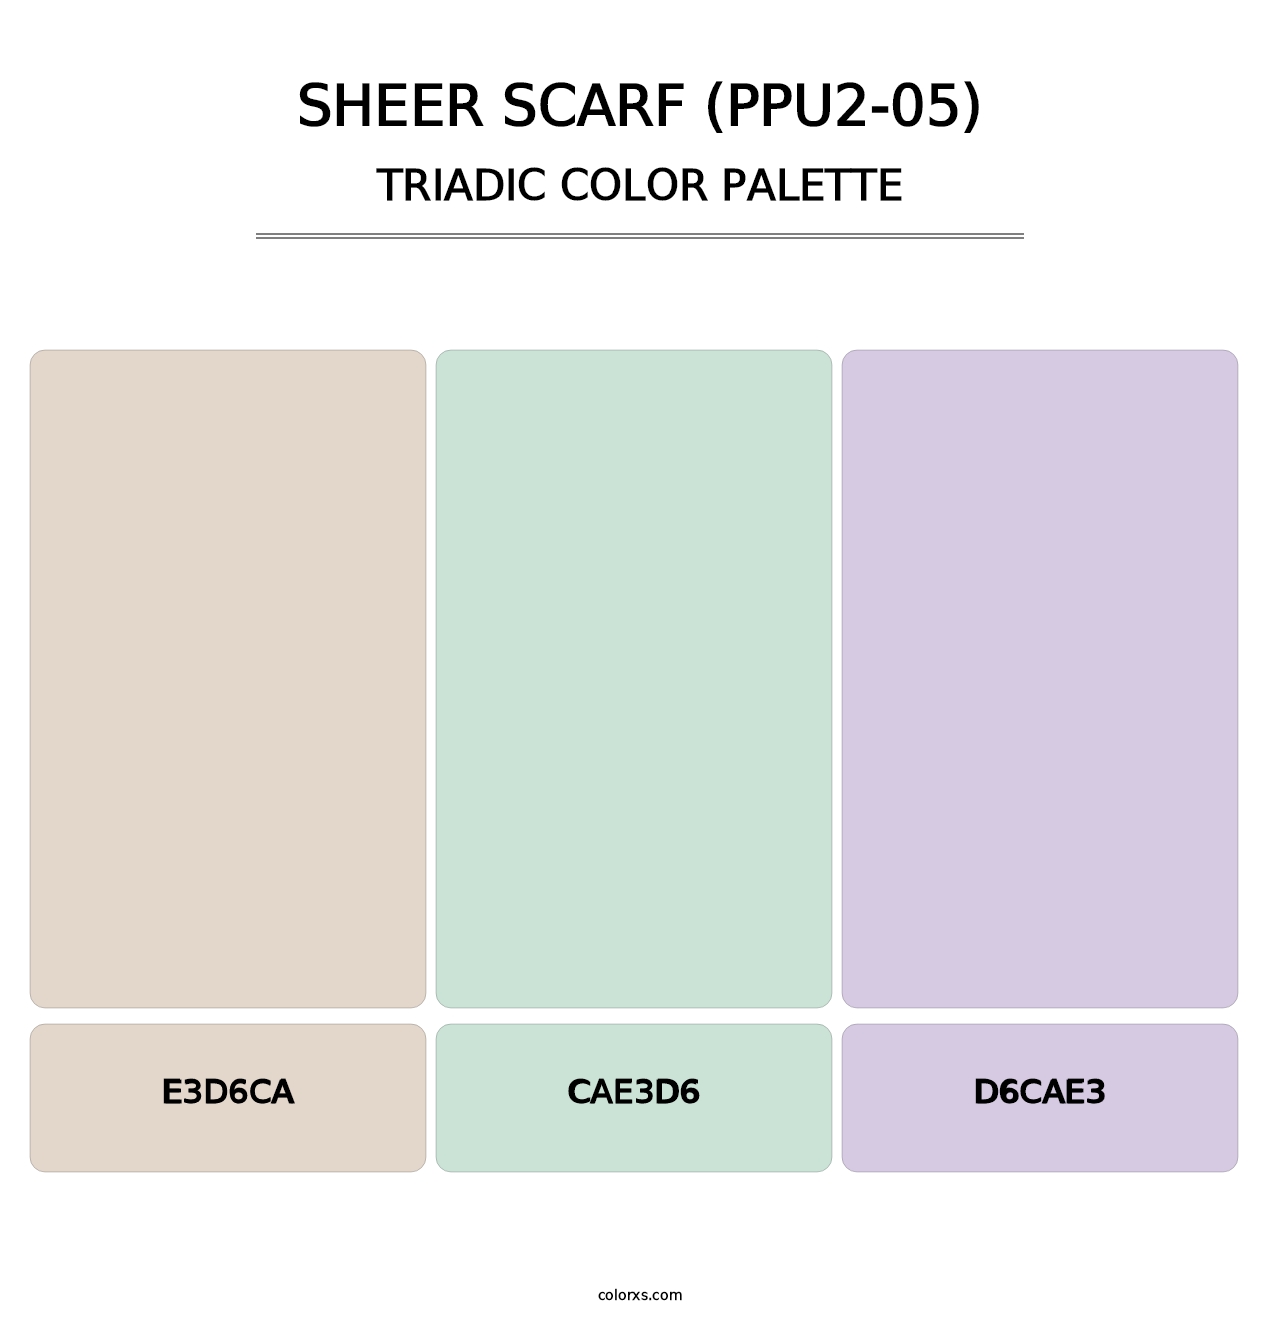 Sheer Scarf (PPU2-05) - Triadic Color Palette